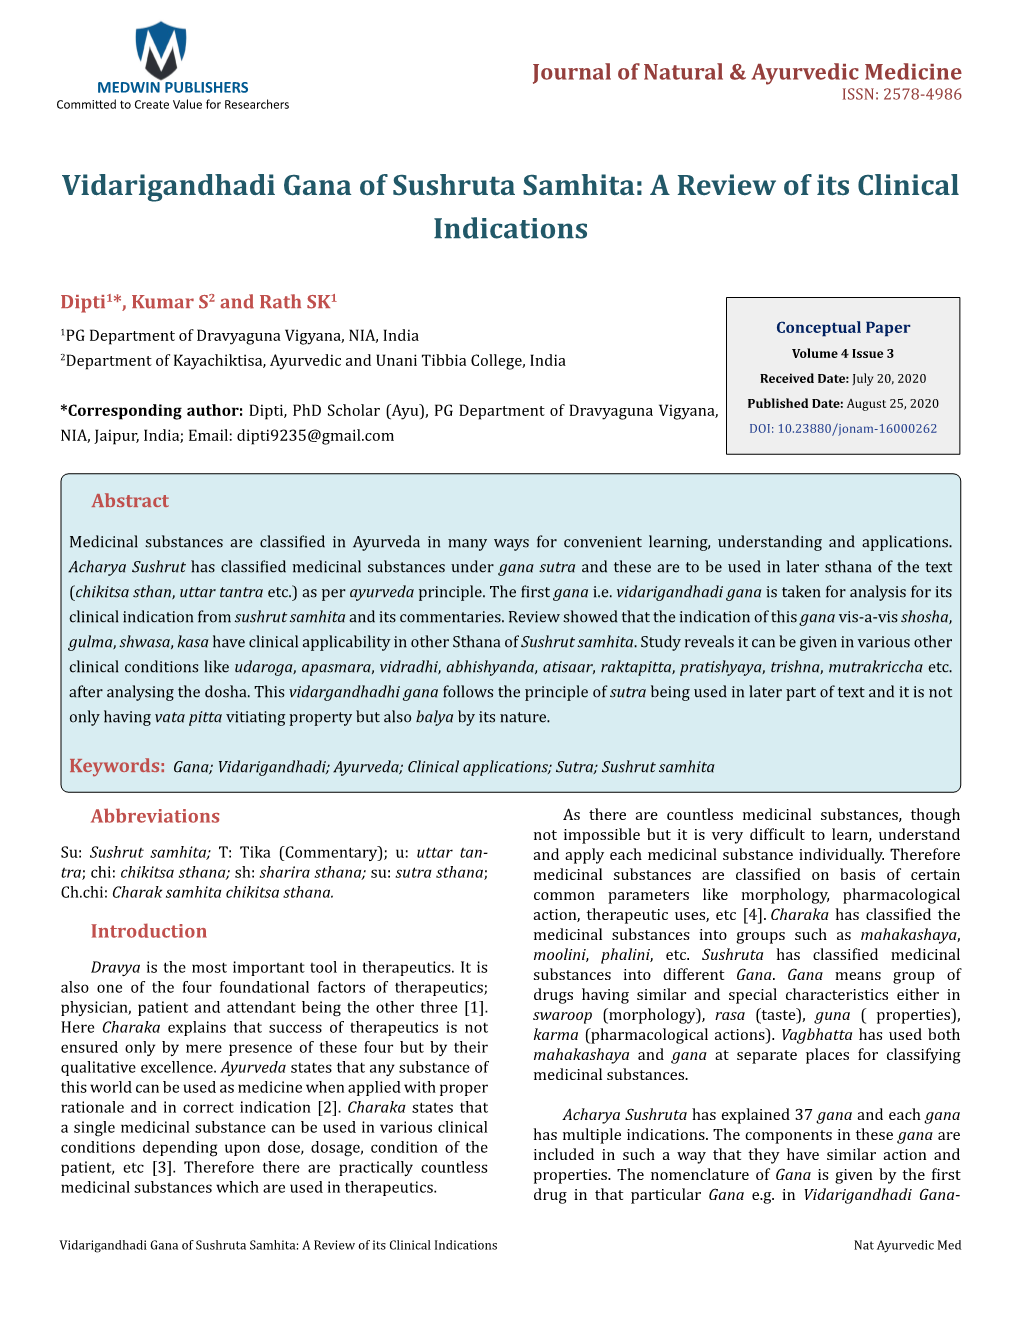 Vidarigandhadi Gana of Sushruta Samhita: a Review of Its Clinical Indications